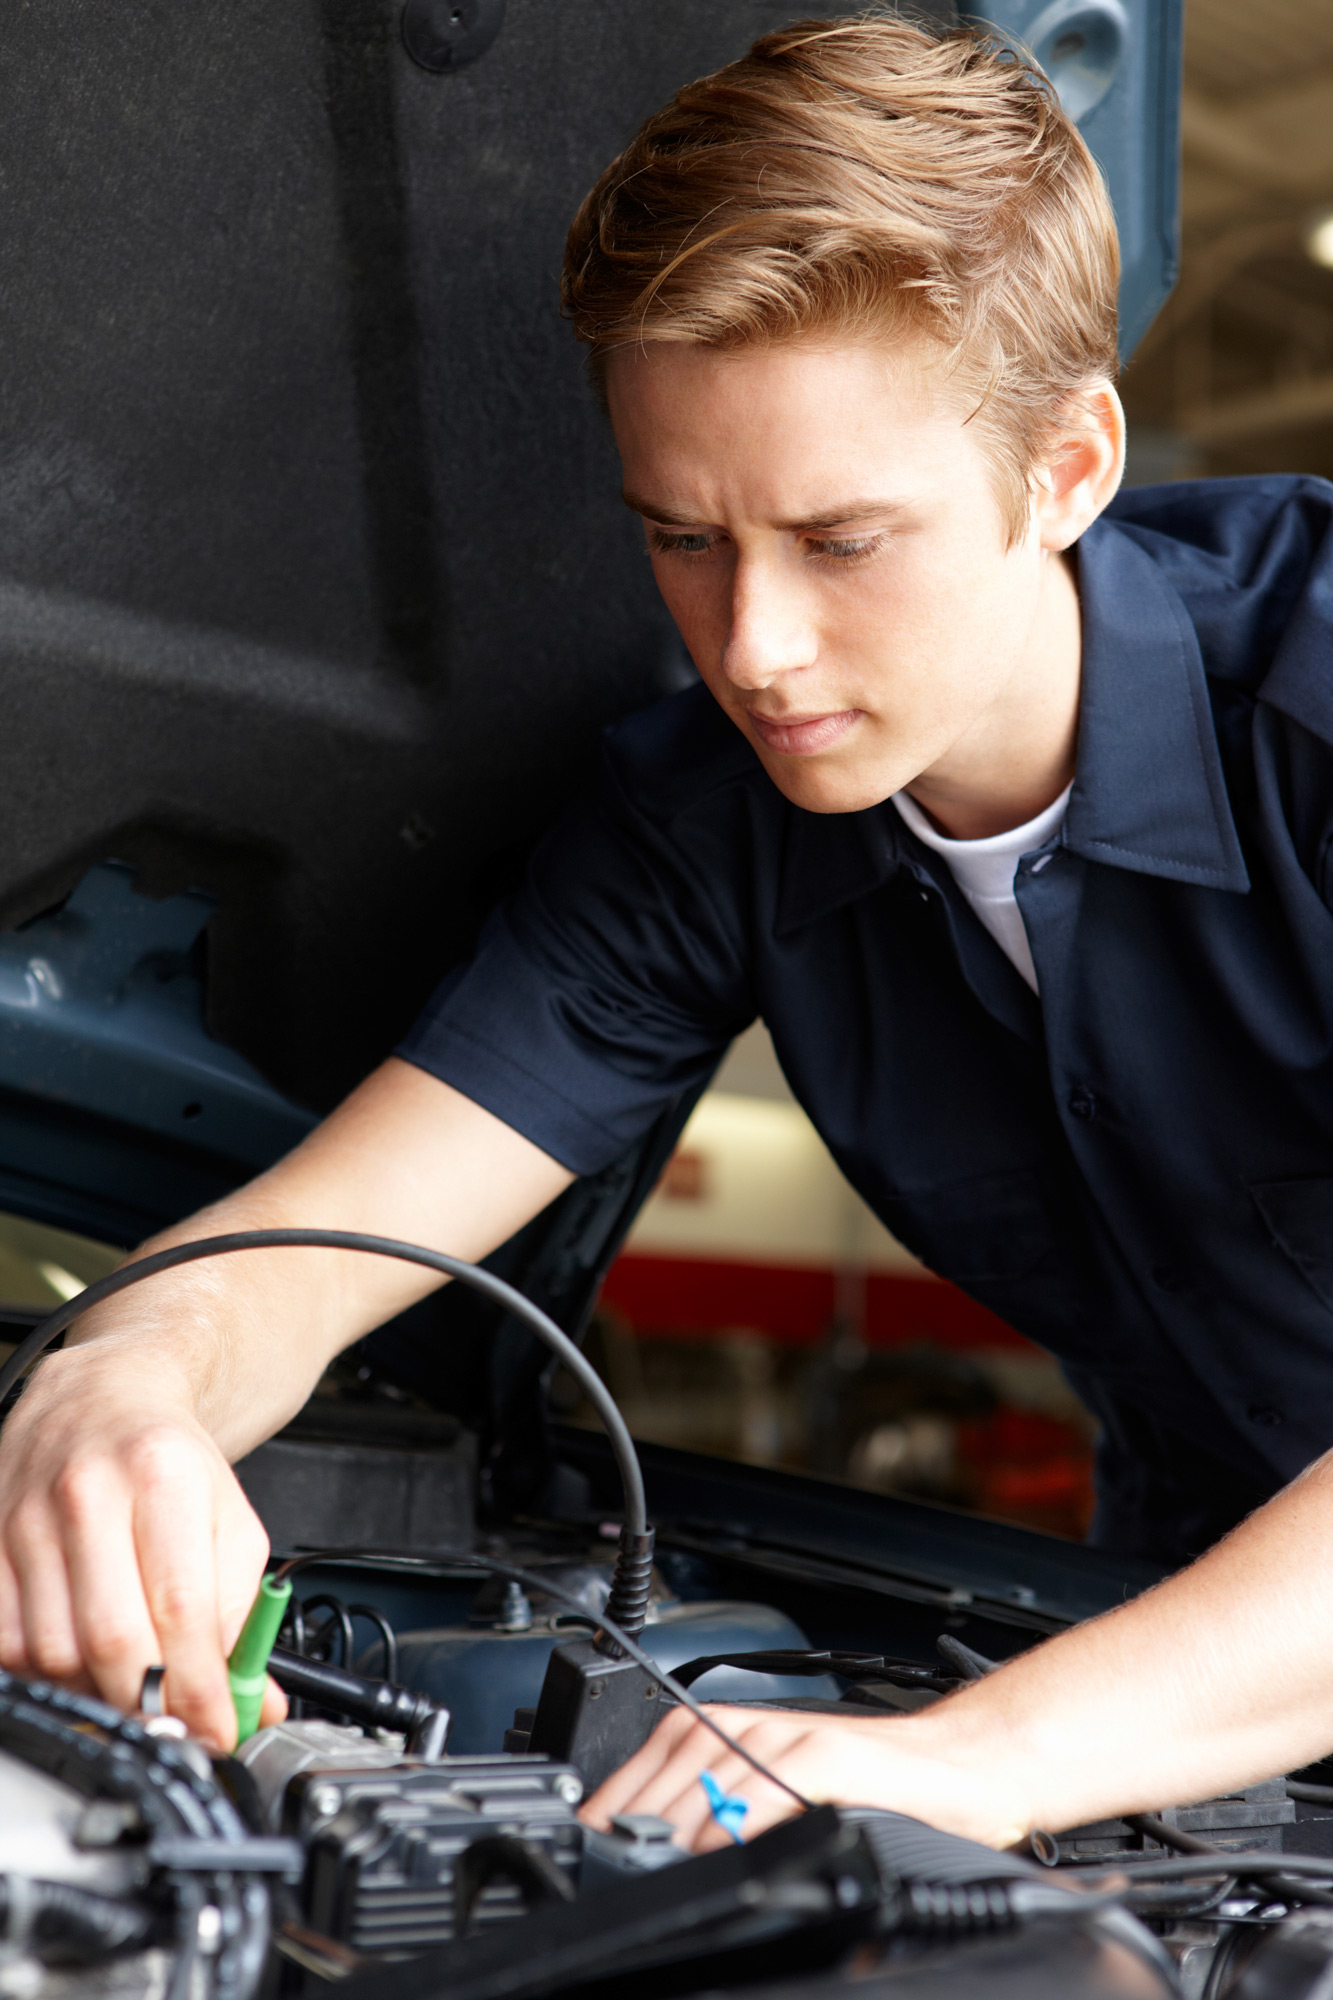 Bmw car mechanic apprenticeships #1